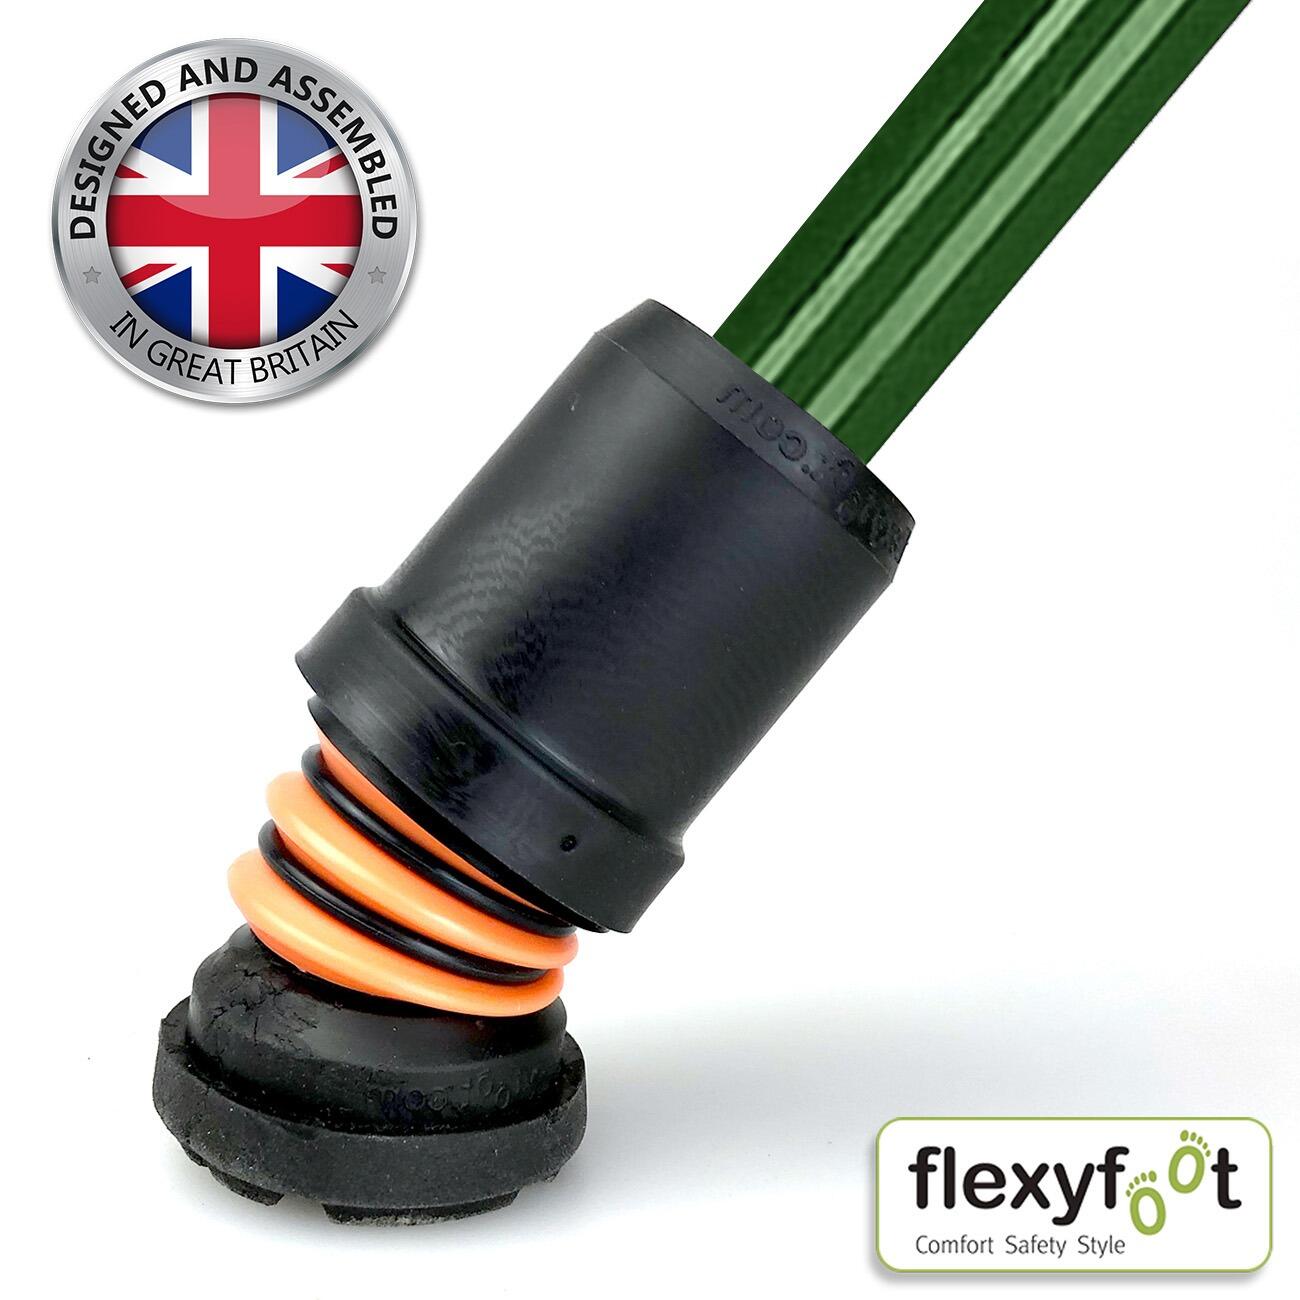 Flexyfoot Soft Grip Shock Absorbing Crutches - British Racing Green - Flexing